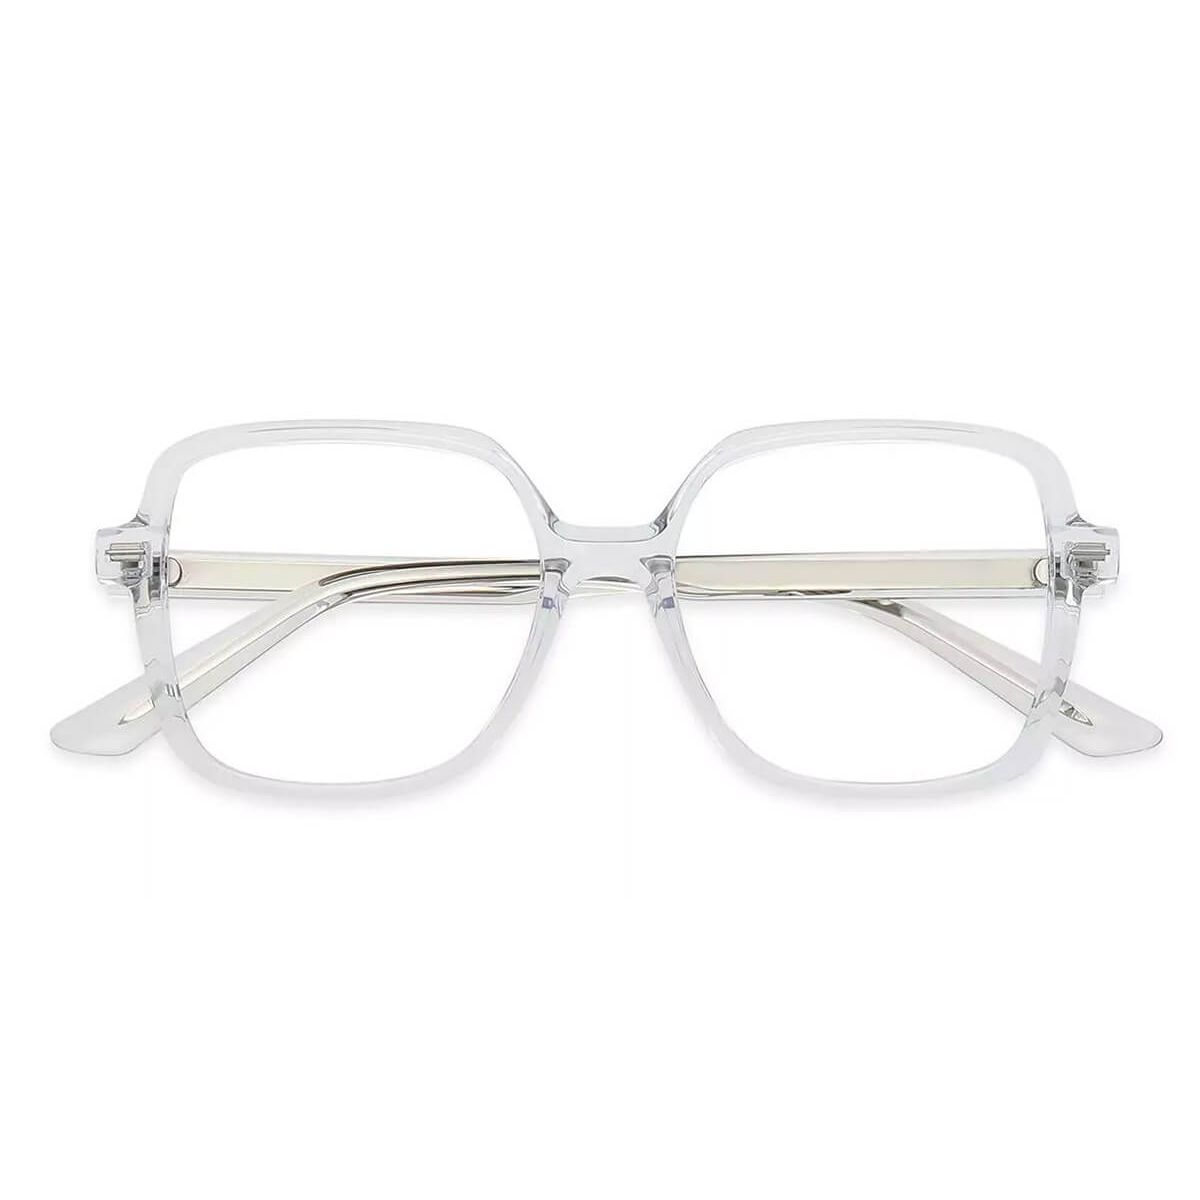 Bc907 Rectangle Square Clear Eyeglasses Frames Leoptique